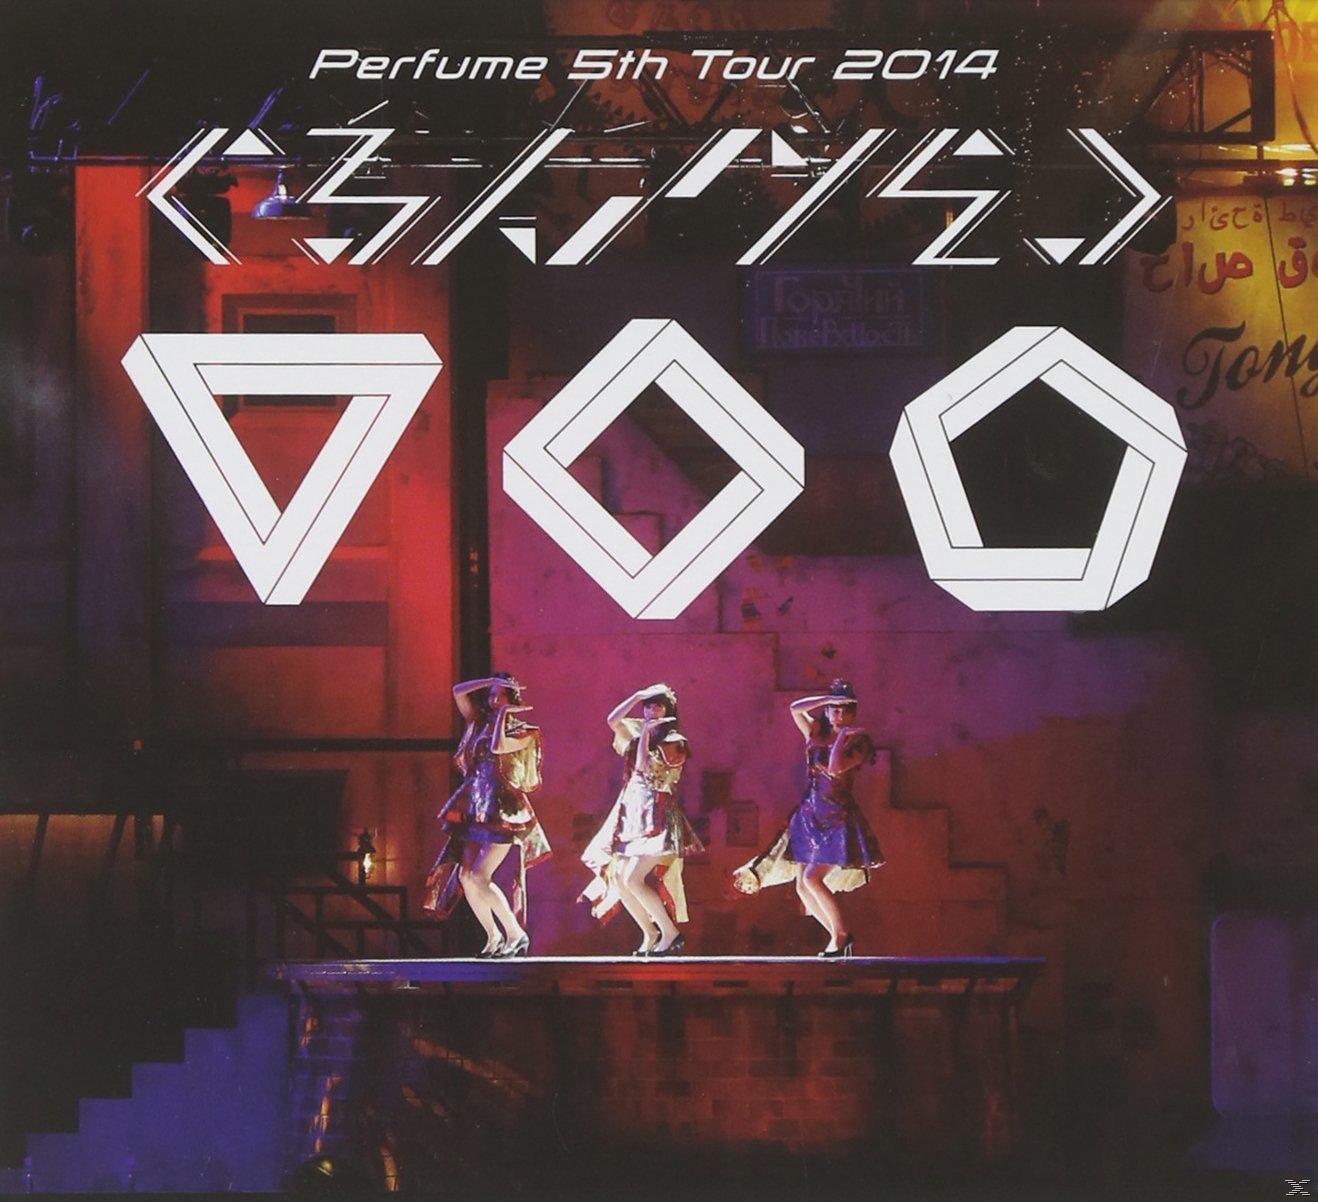 5th Tour 2014 (LP + Perfume - Bonus-CD) - Perfume